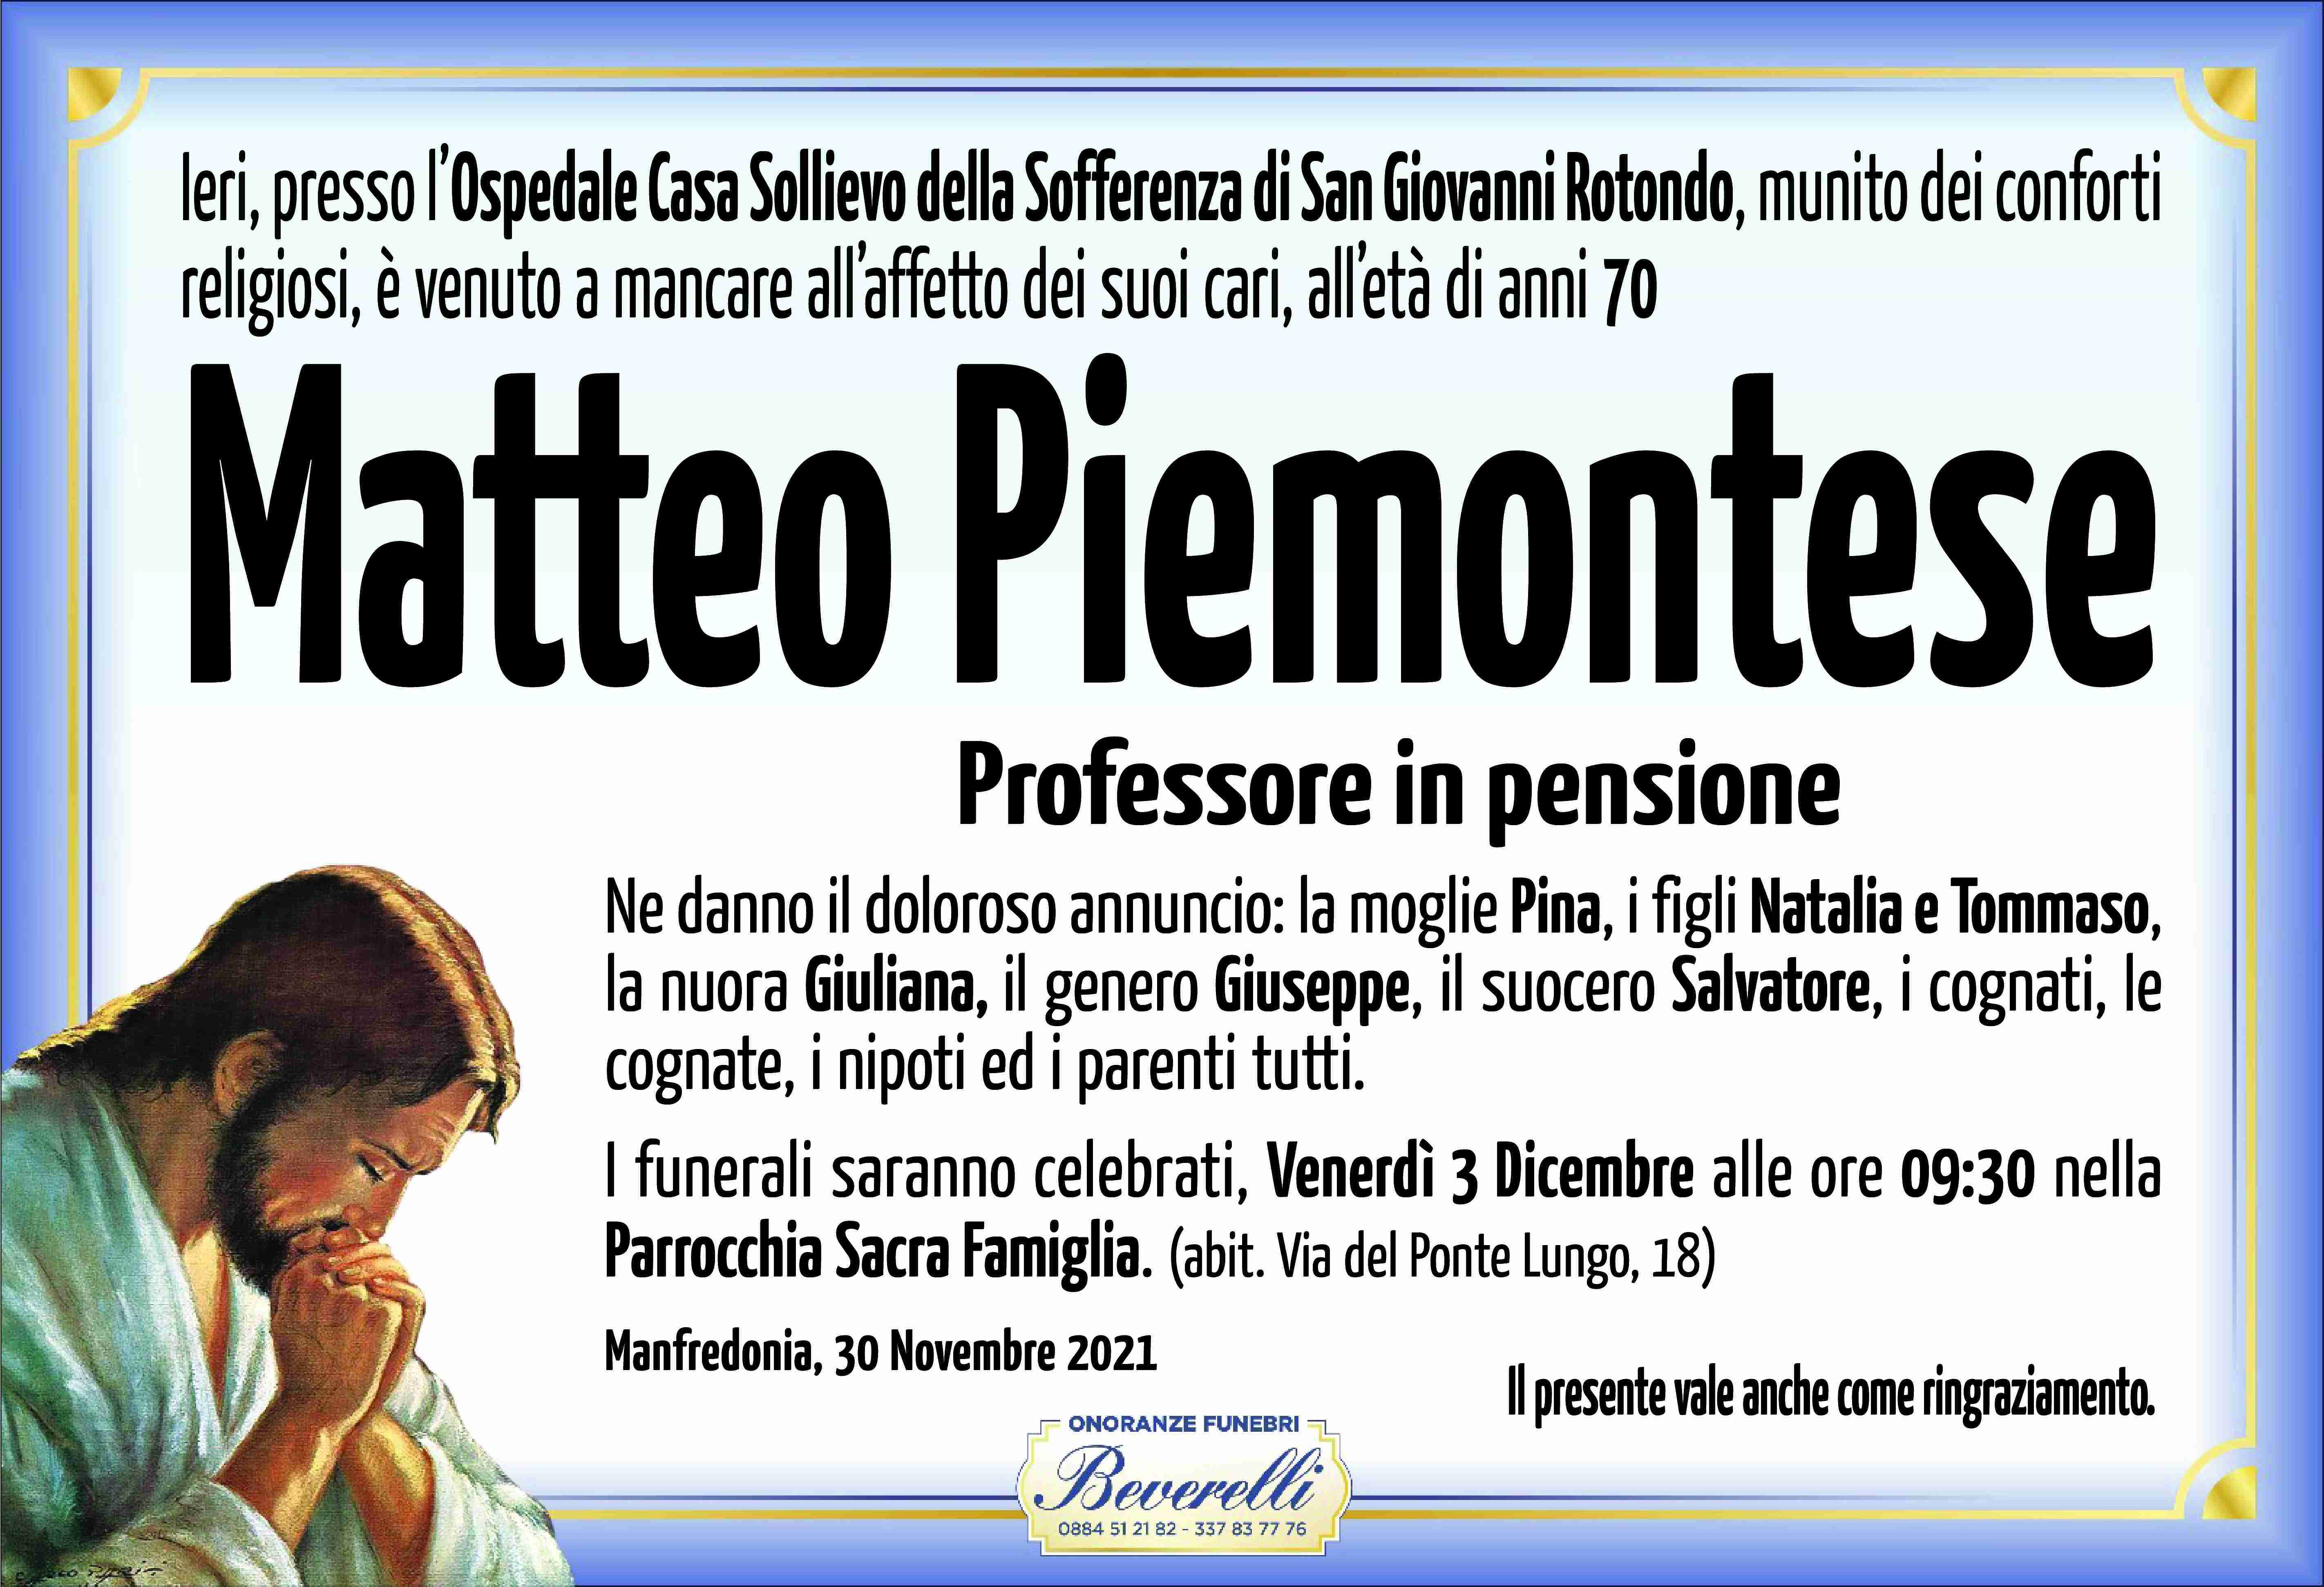 Matteo Piemontese